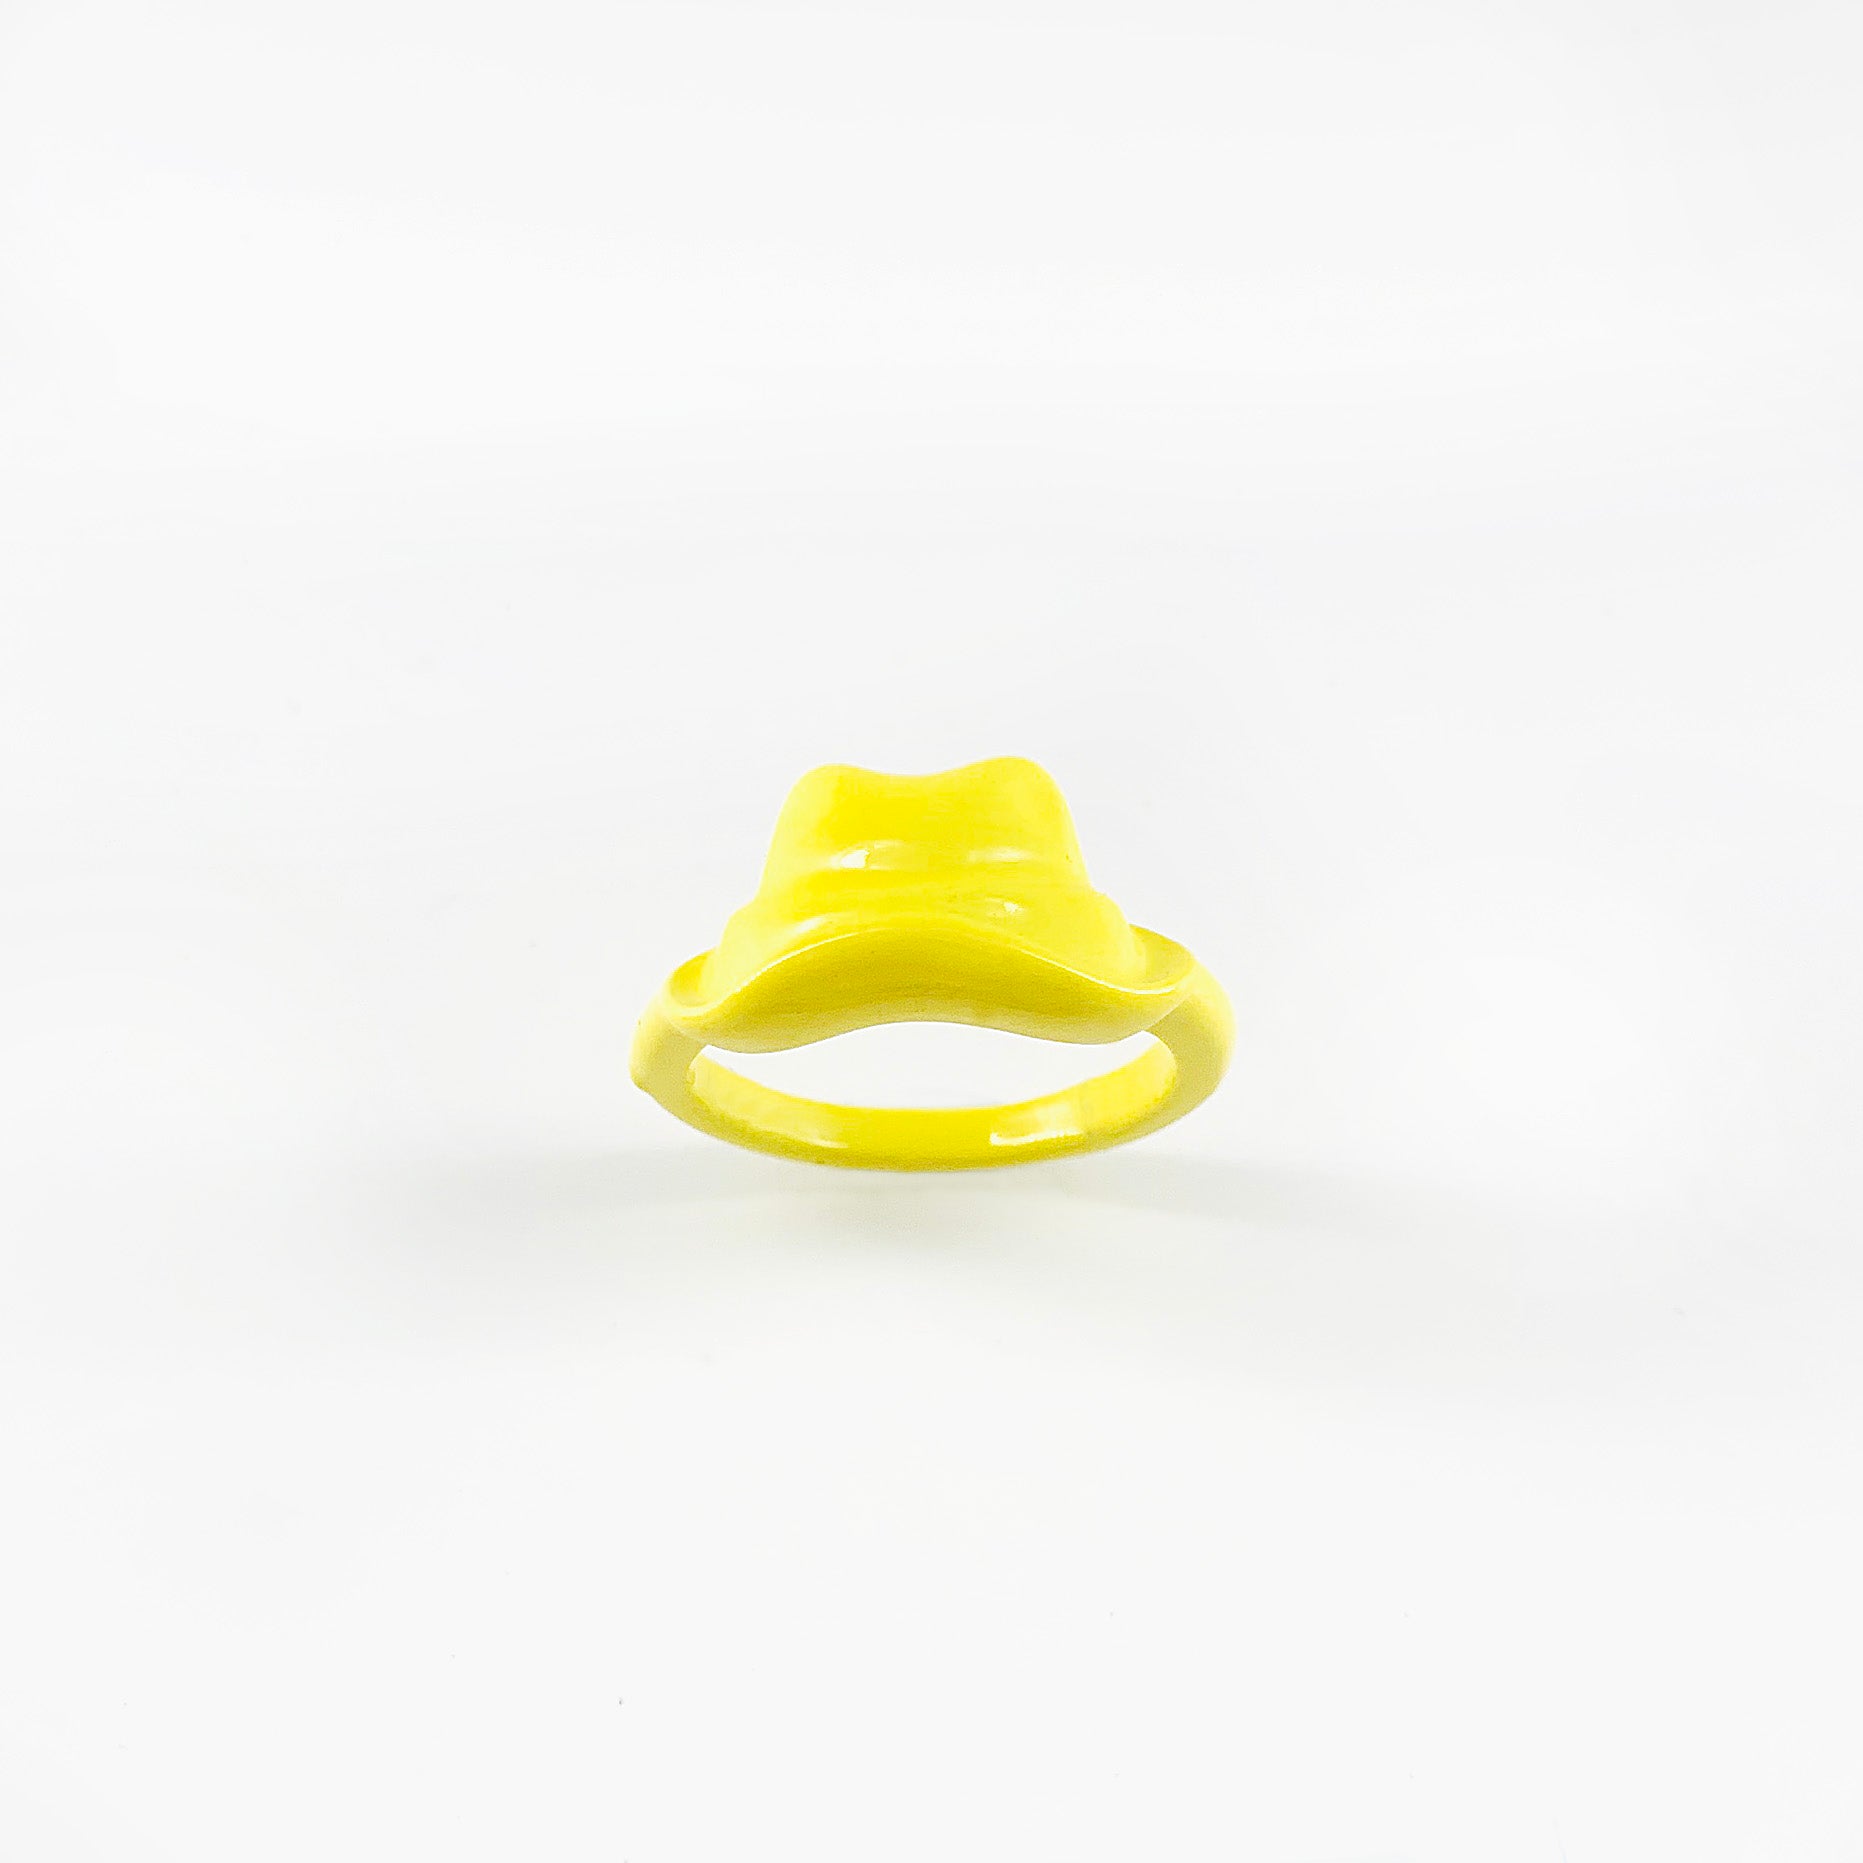 Enamel painted yellow hat ring